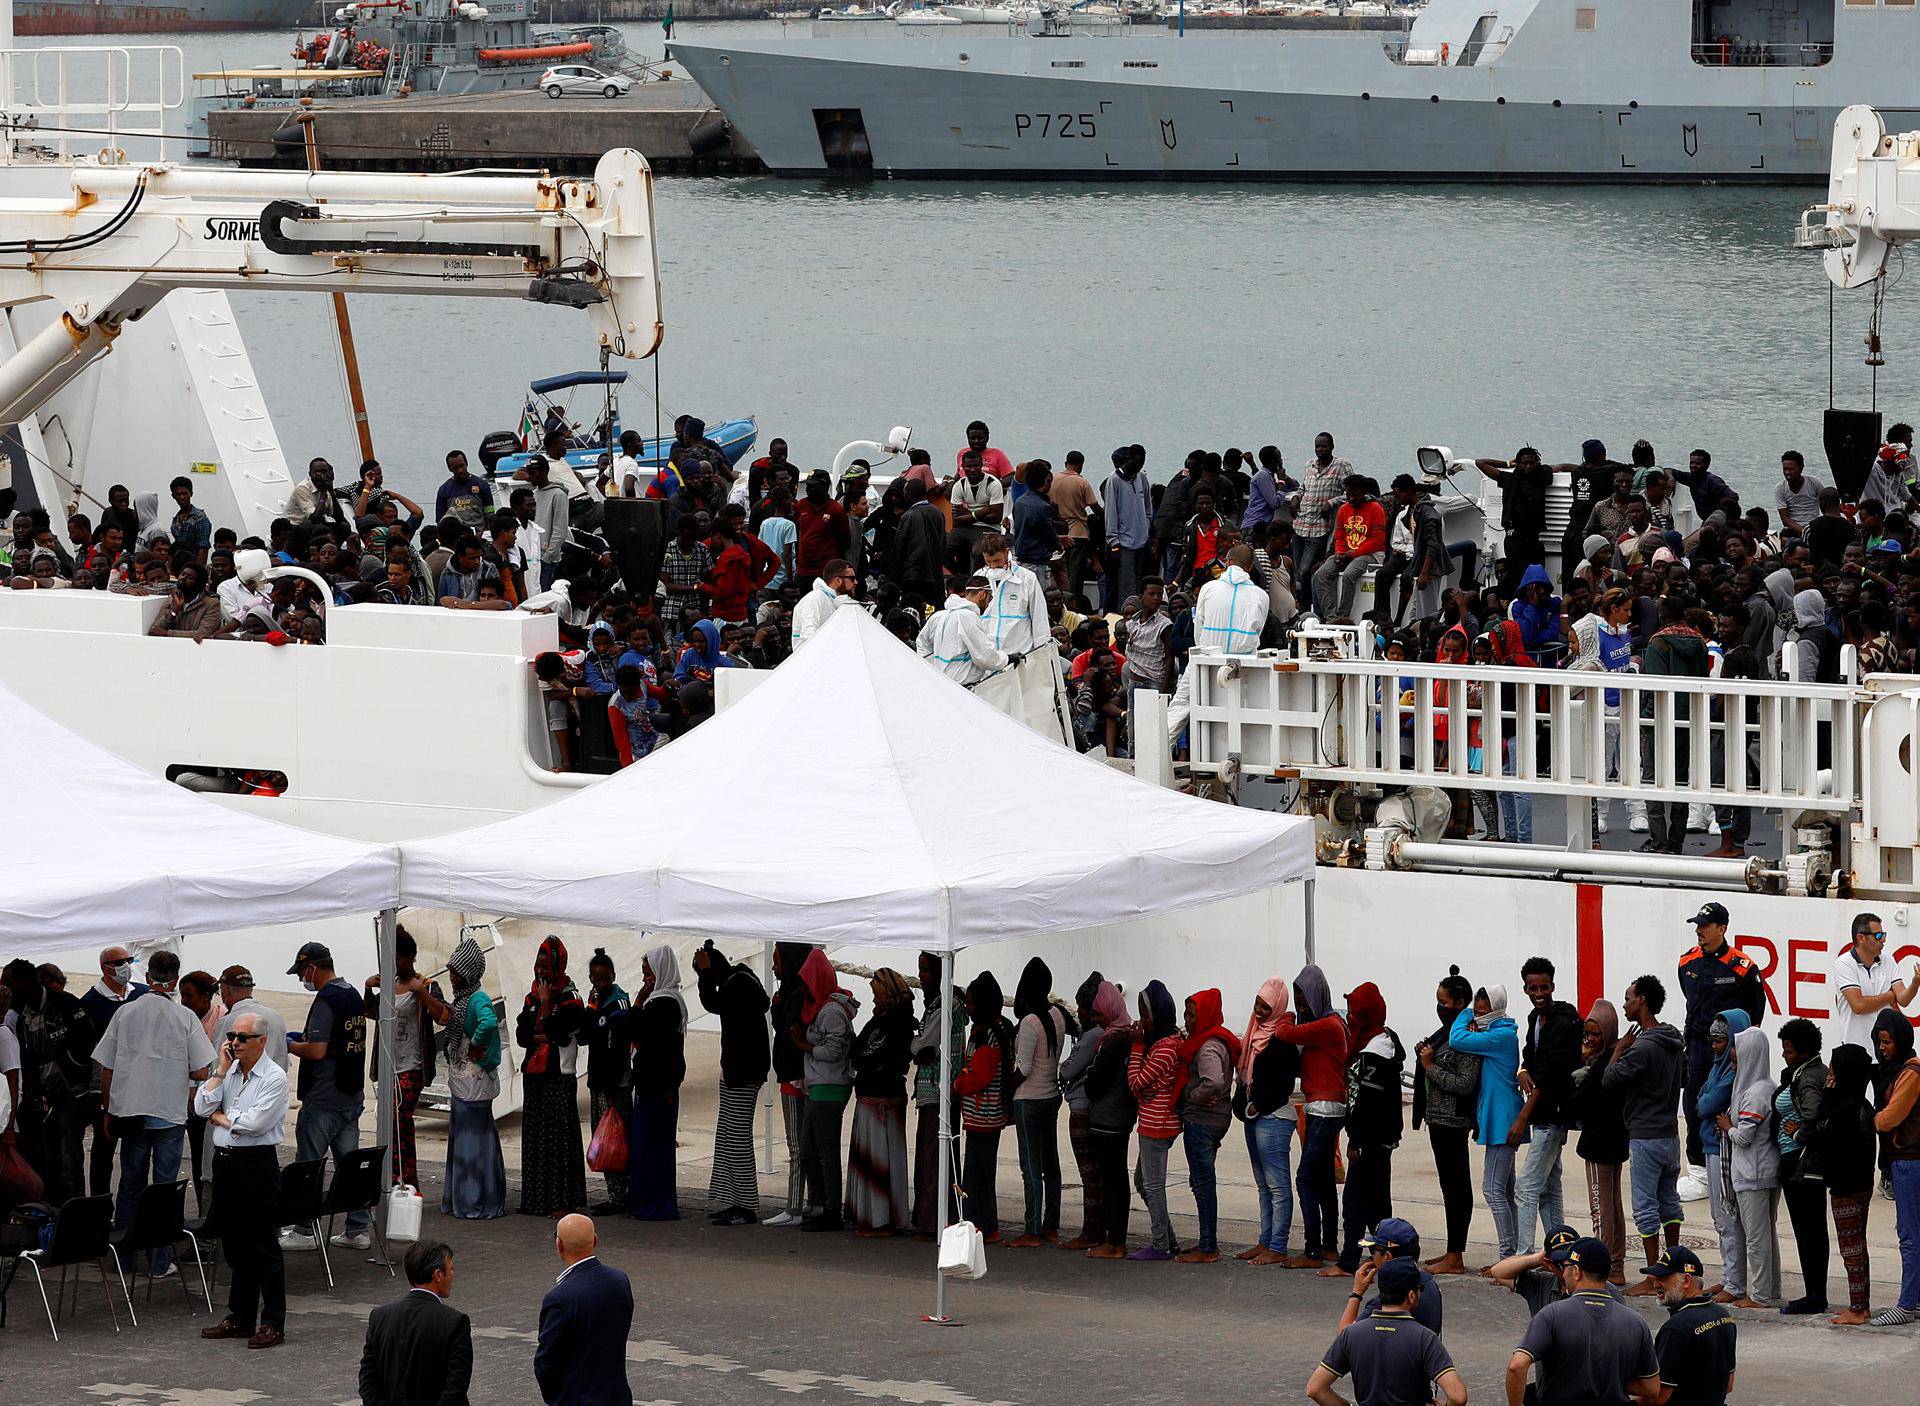 Migrants disembark Italian coast guard vessel "Diciotti" as they arrive at the port of Catania